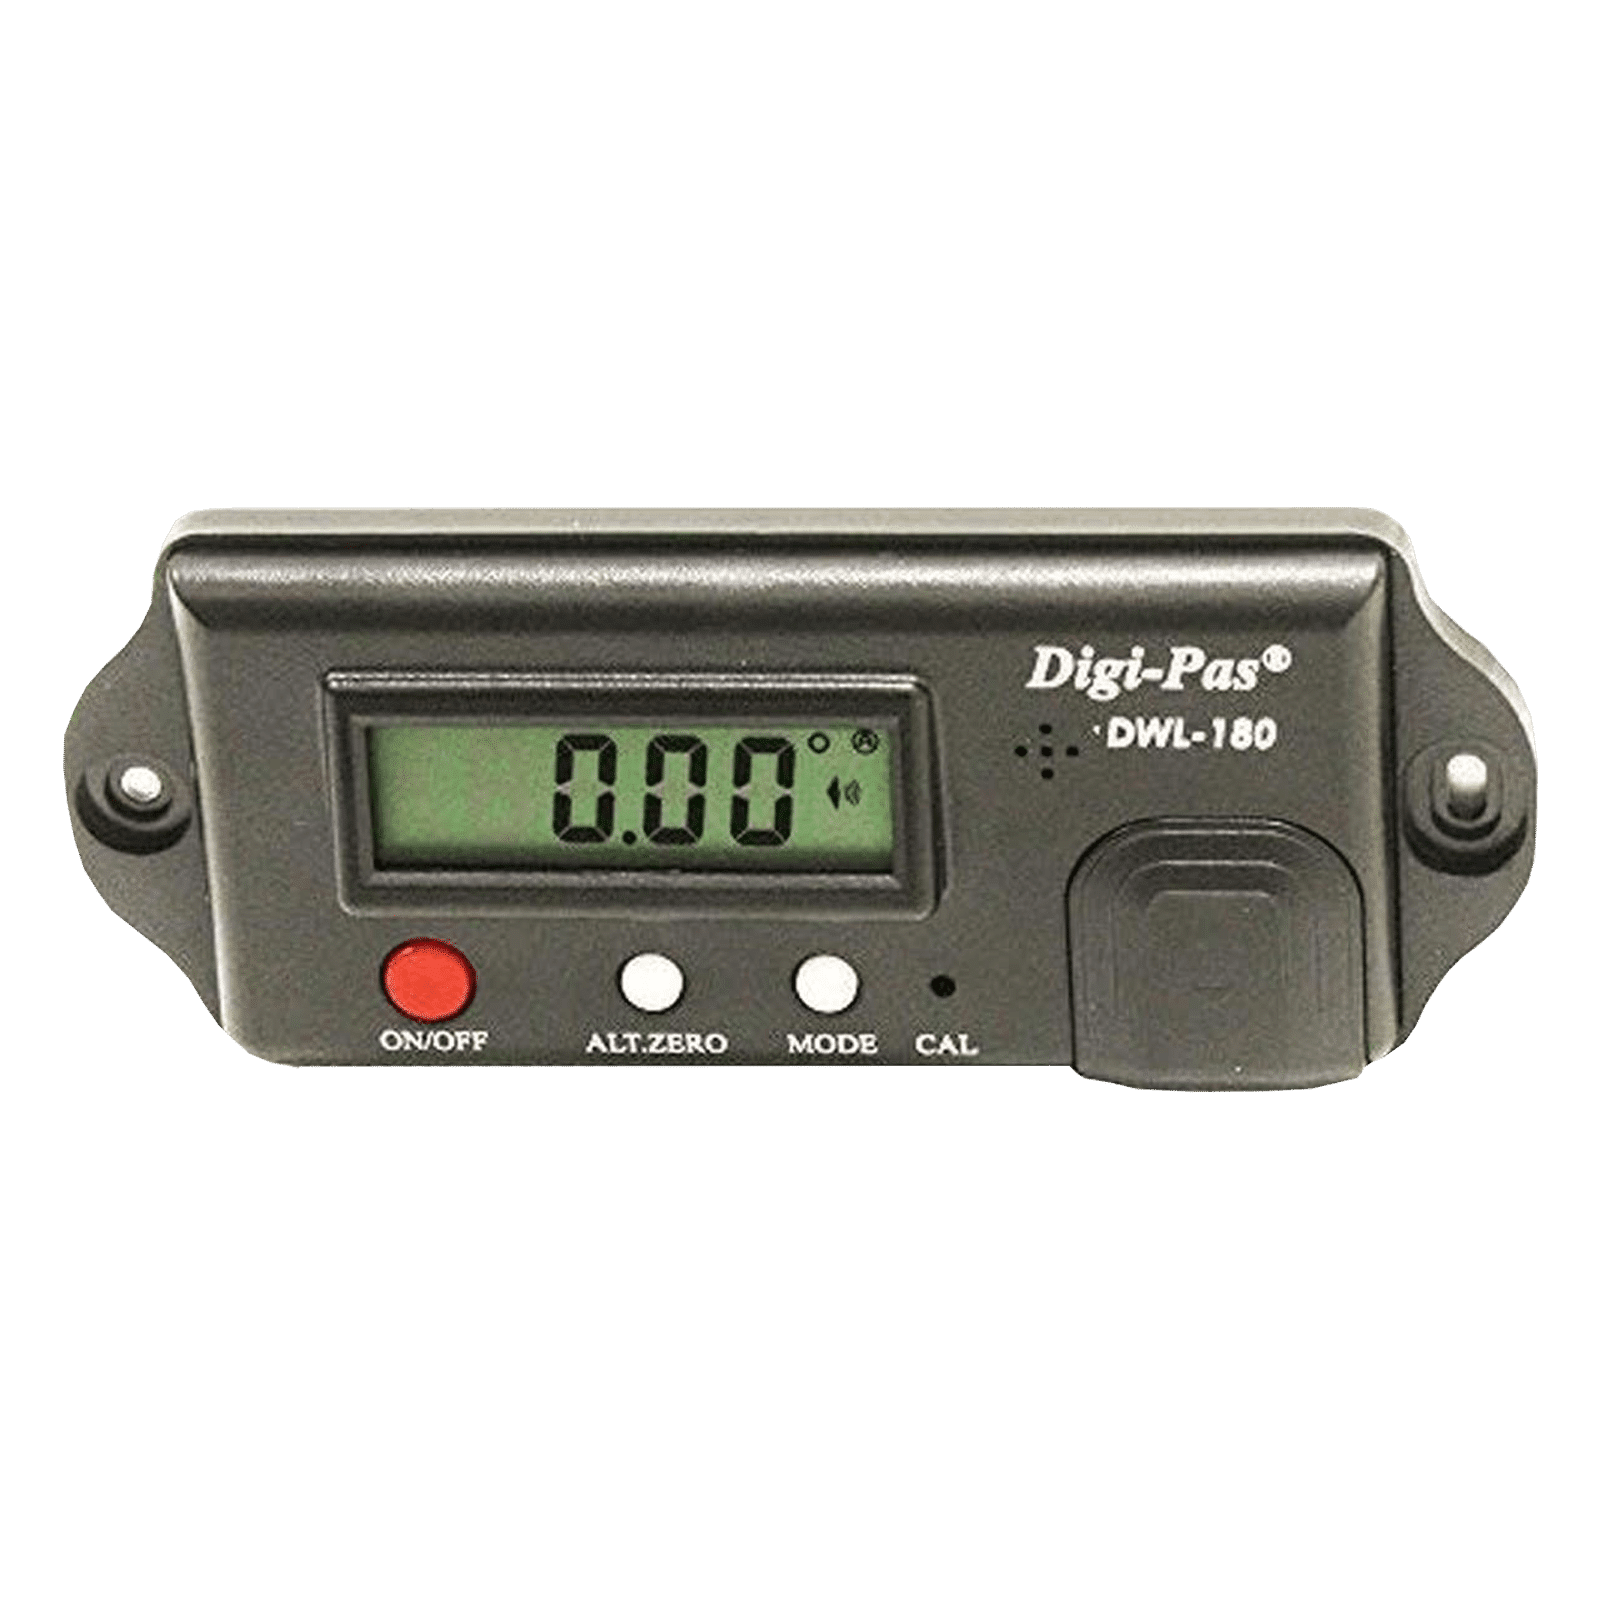 Digi-Pas DWL 180 digitale Wasserwaage